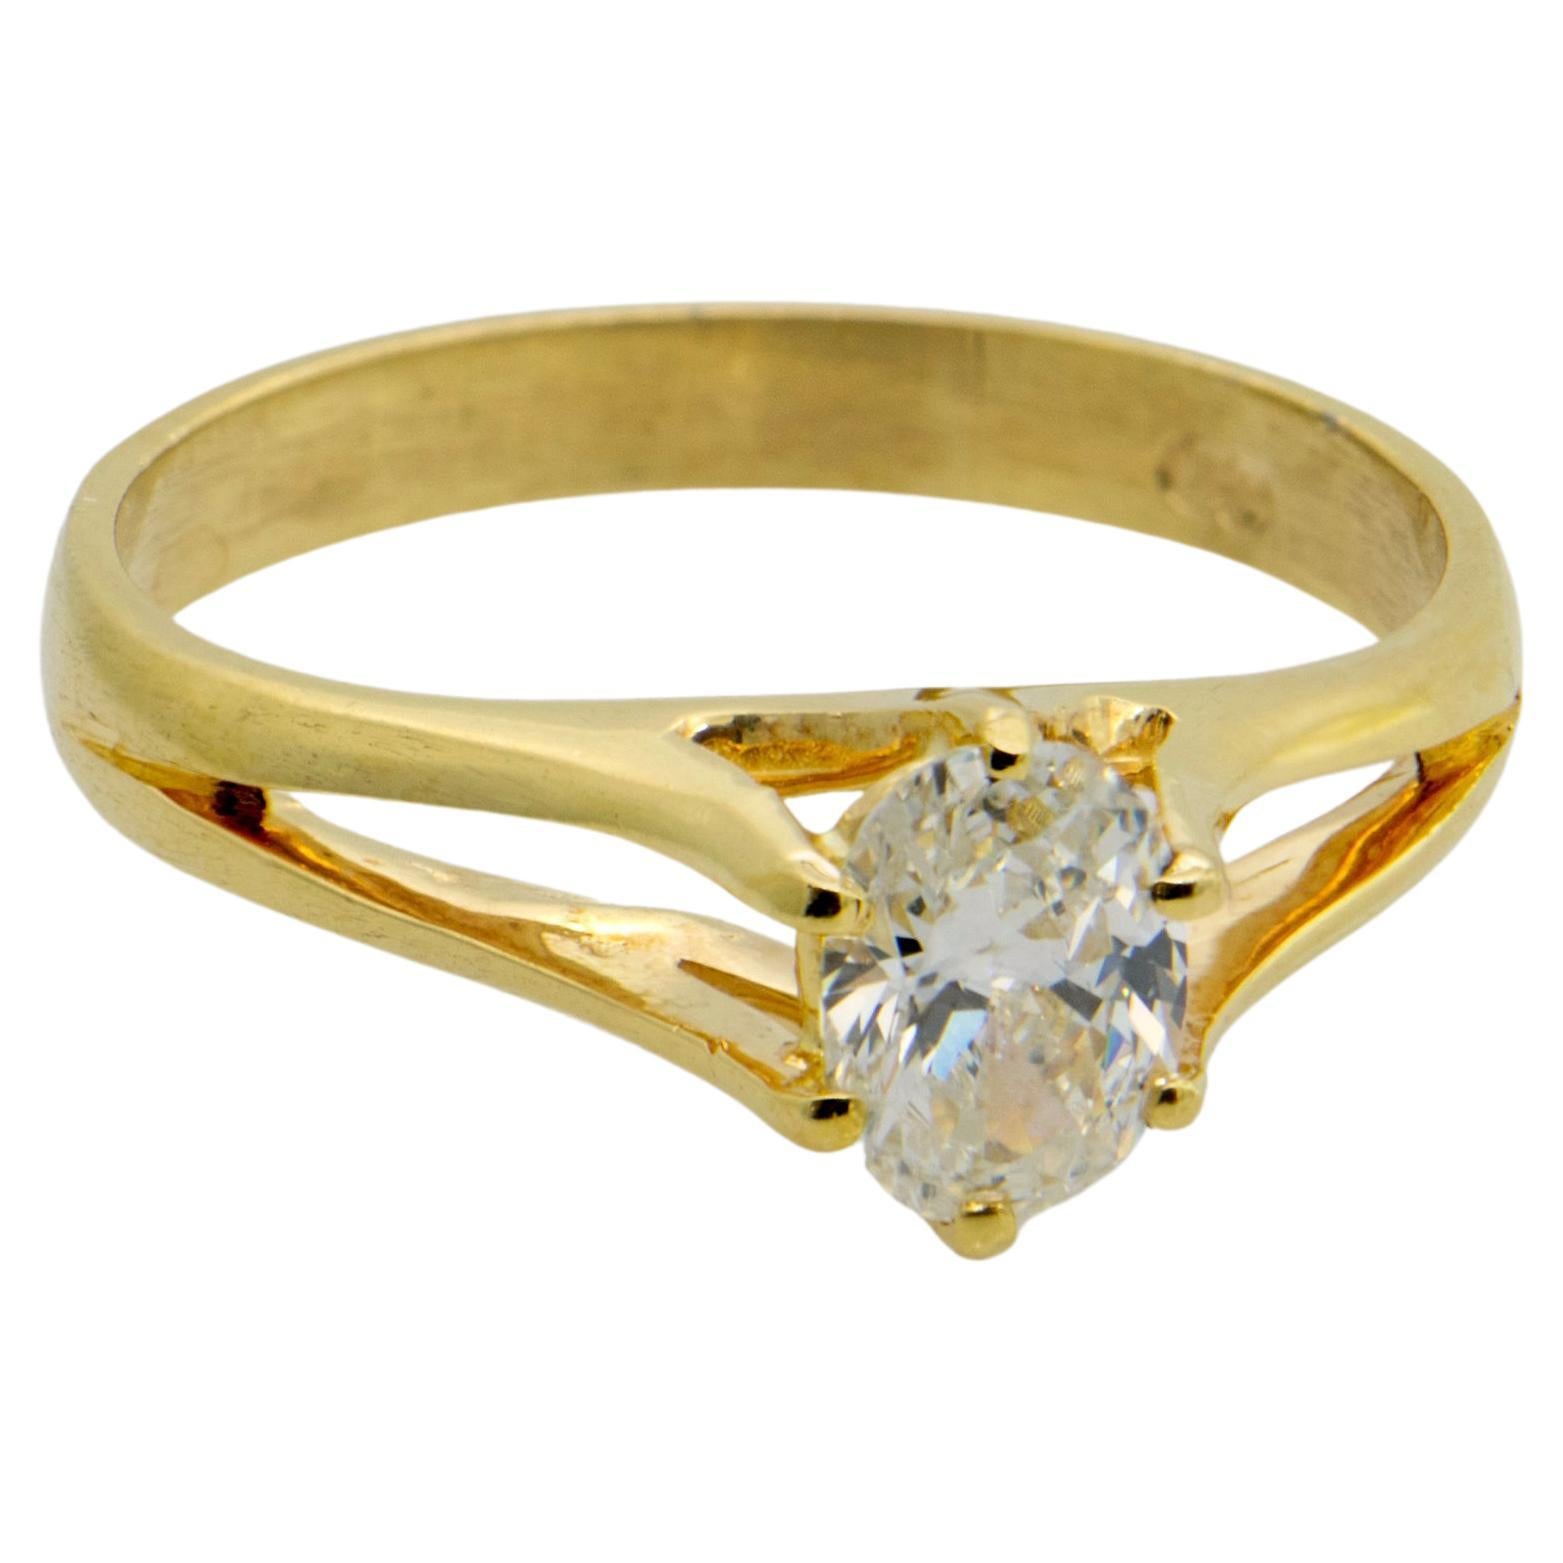 one carat oval diamond ring on hand